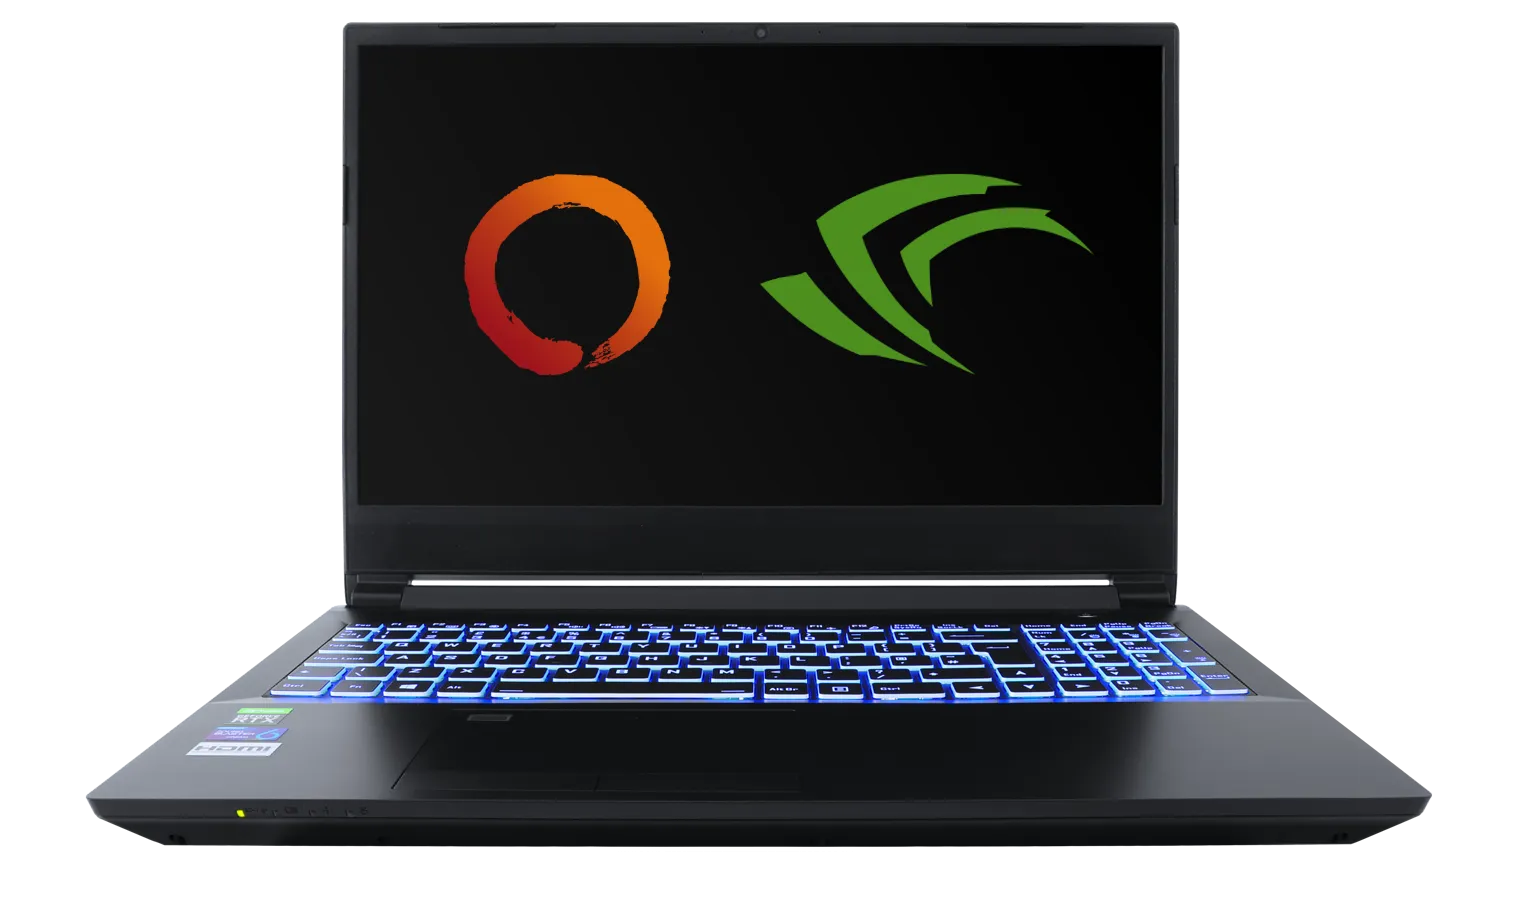 Juno Computers lançou o laptop Mars 15 equipado com Ubuntu